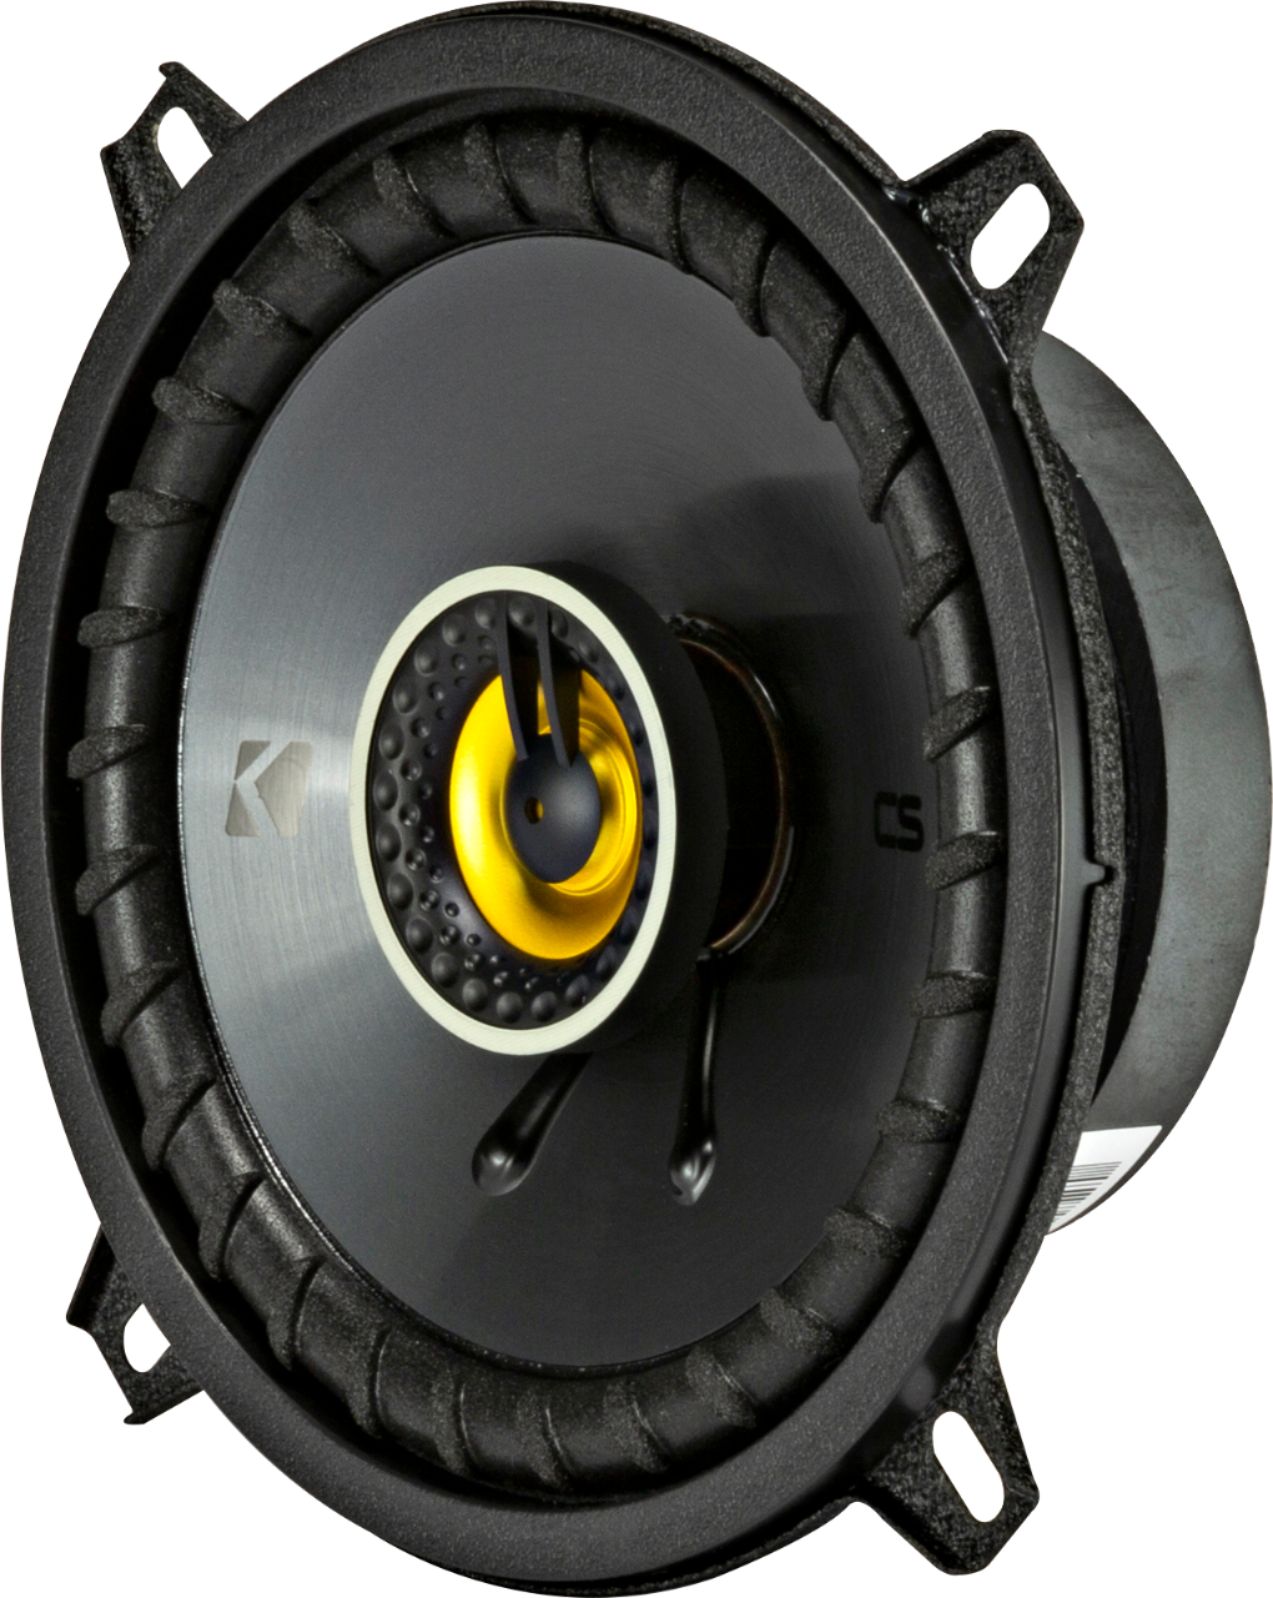 Left View: KICKER - CS Series 5-1/4" 2-Way Car Speakers with Polypropylene Cones (Pair) - Yellow/Black